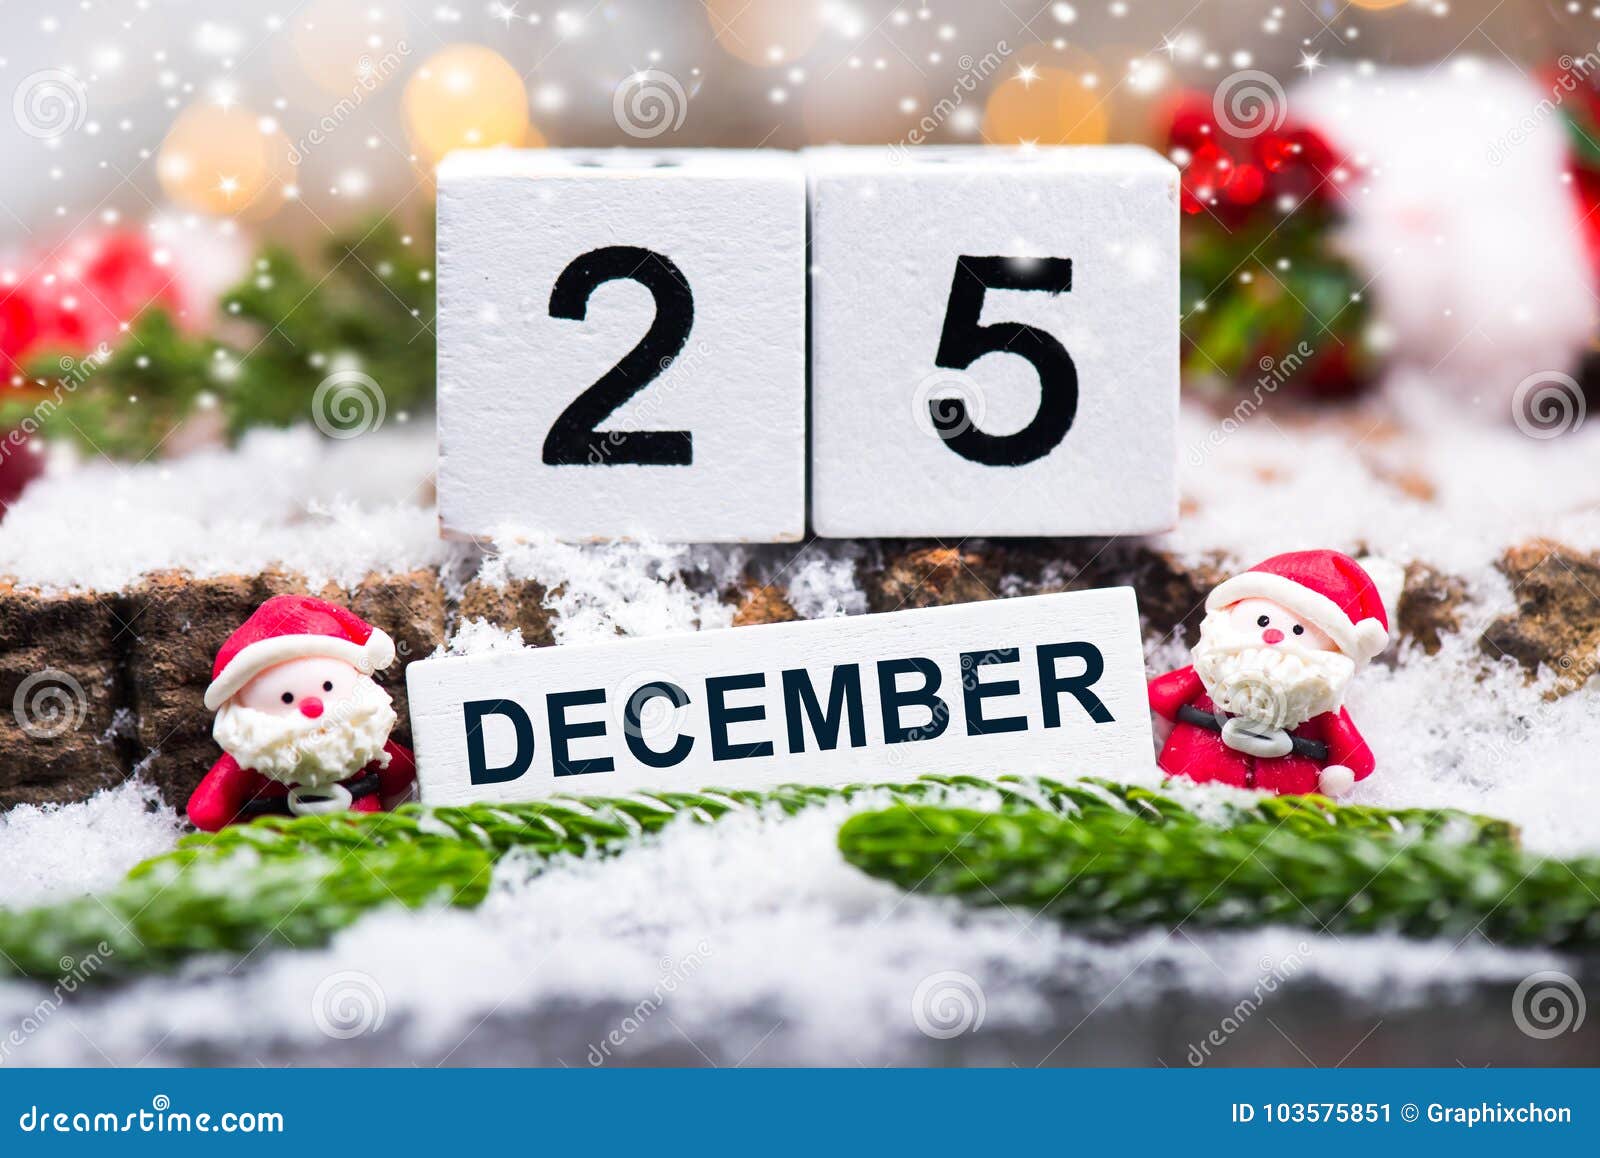 18 24 декабря. 25 Декабря календарь. 25 December. Christmas (December 25)люди. 25 December Christmas Day.